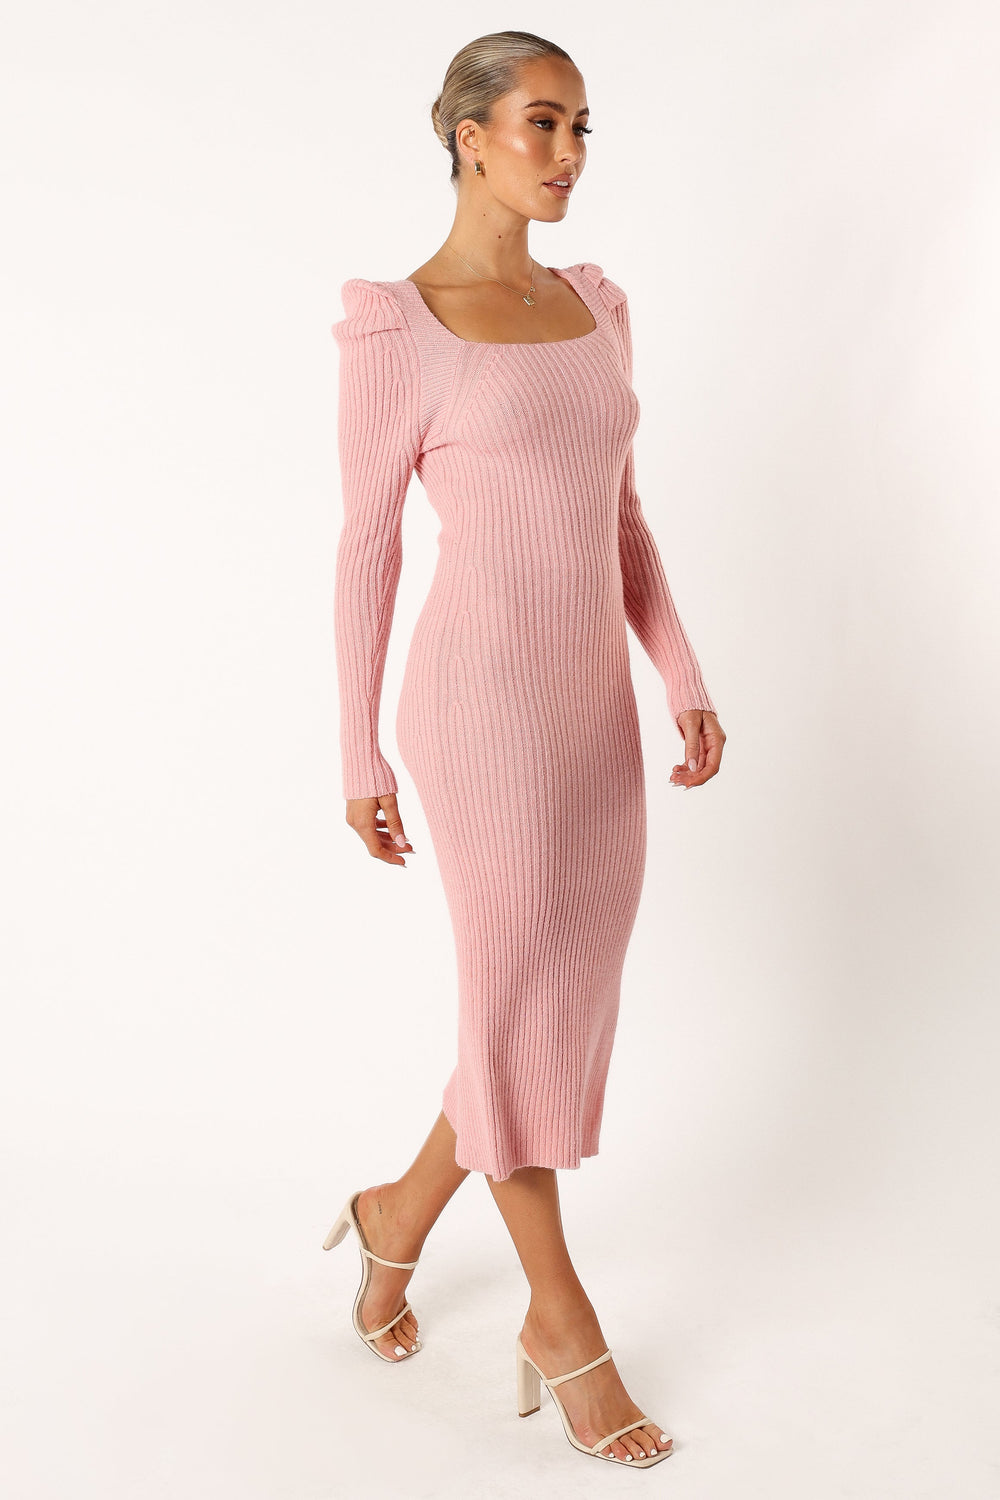 Petal and Pup USA DRESSES Camryn Puff Sleeve Knit Sweater Dress - Blush